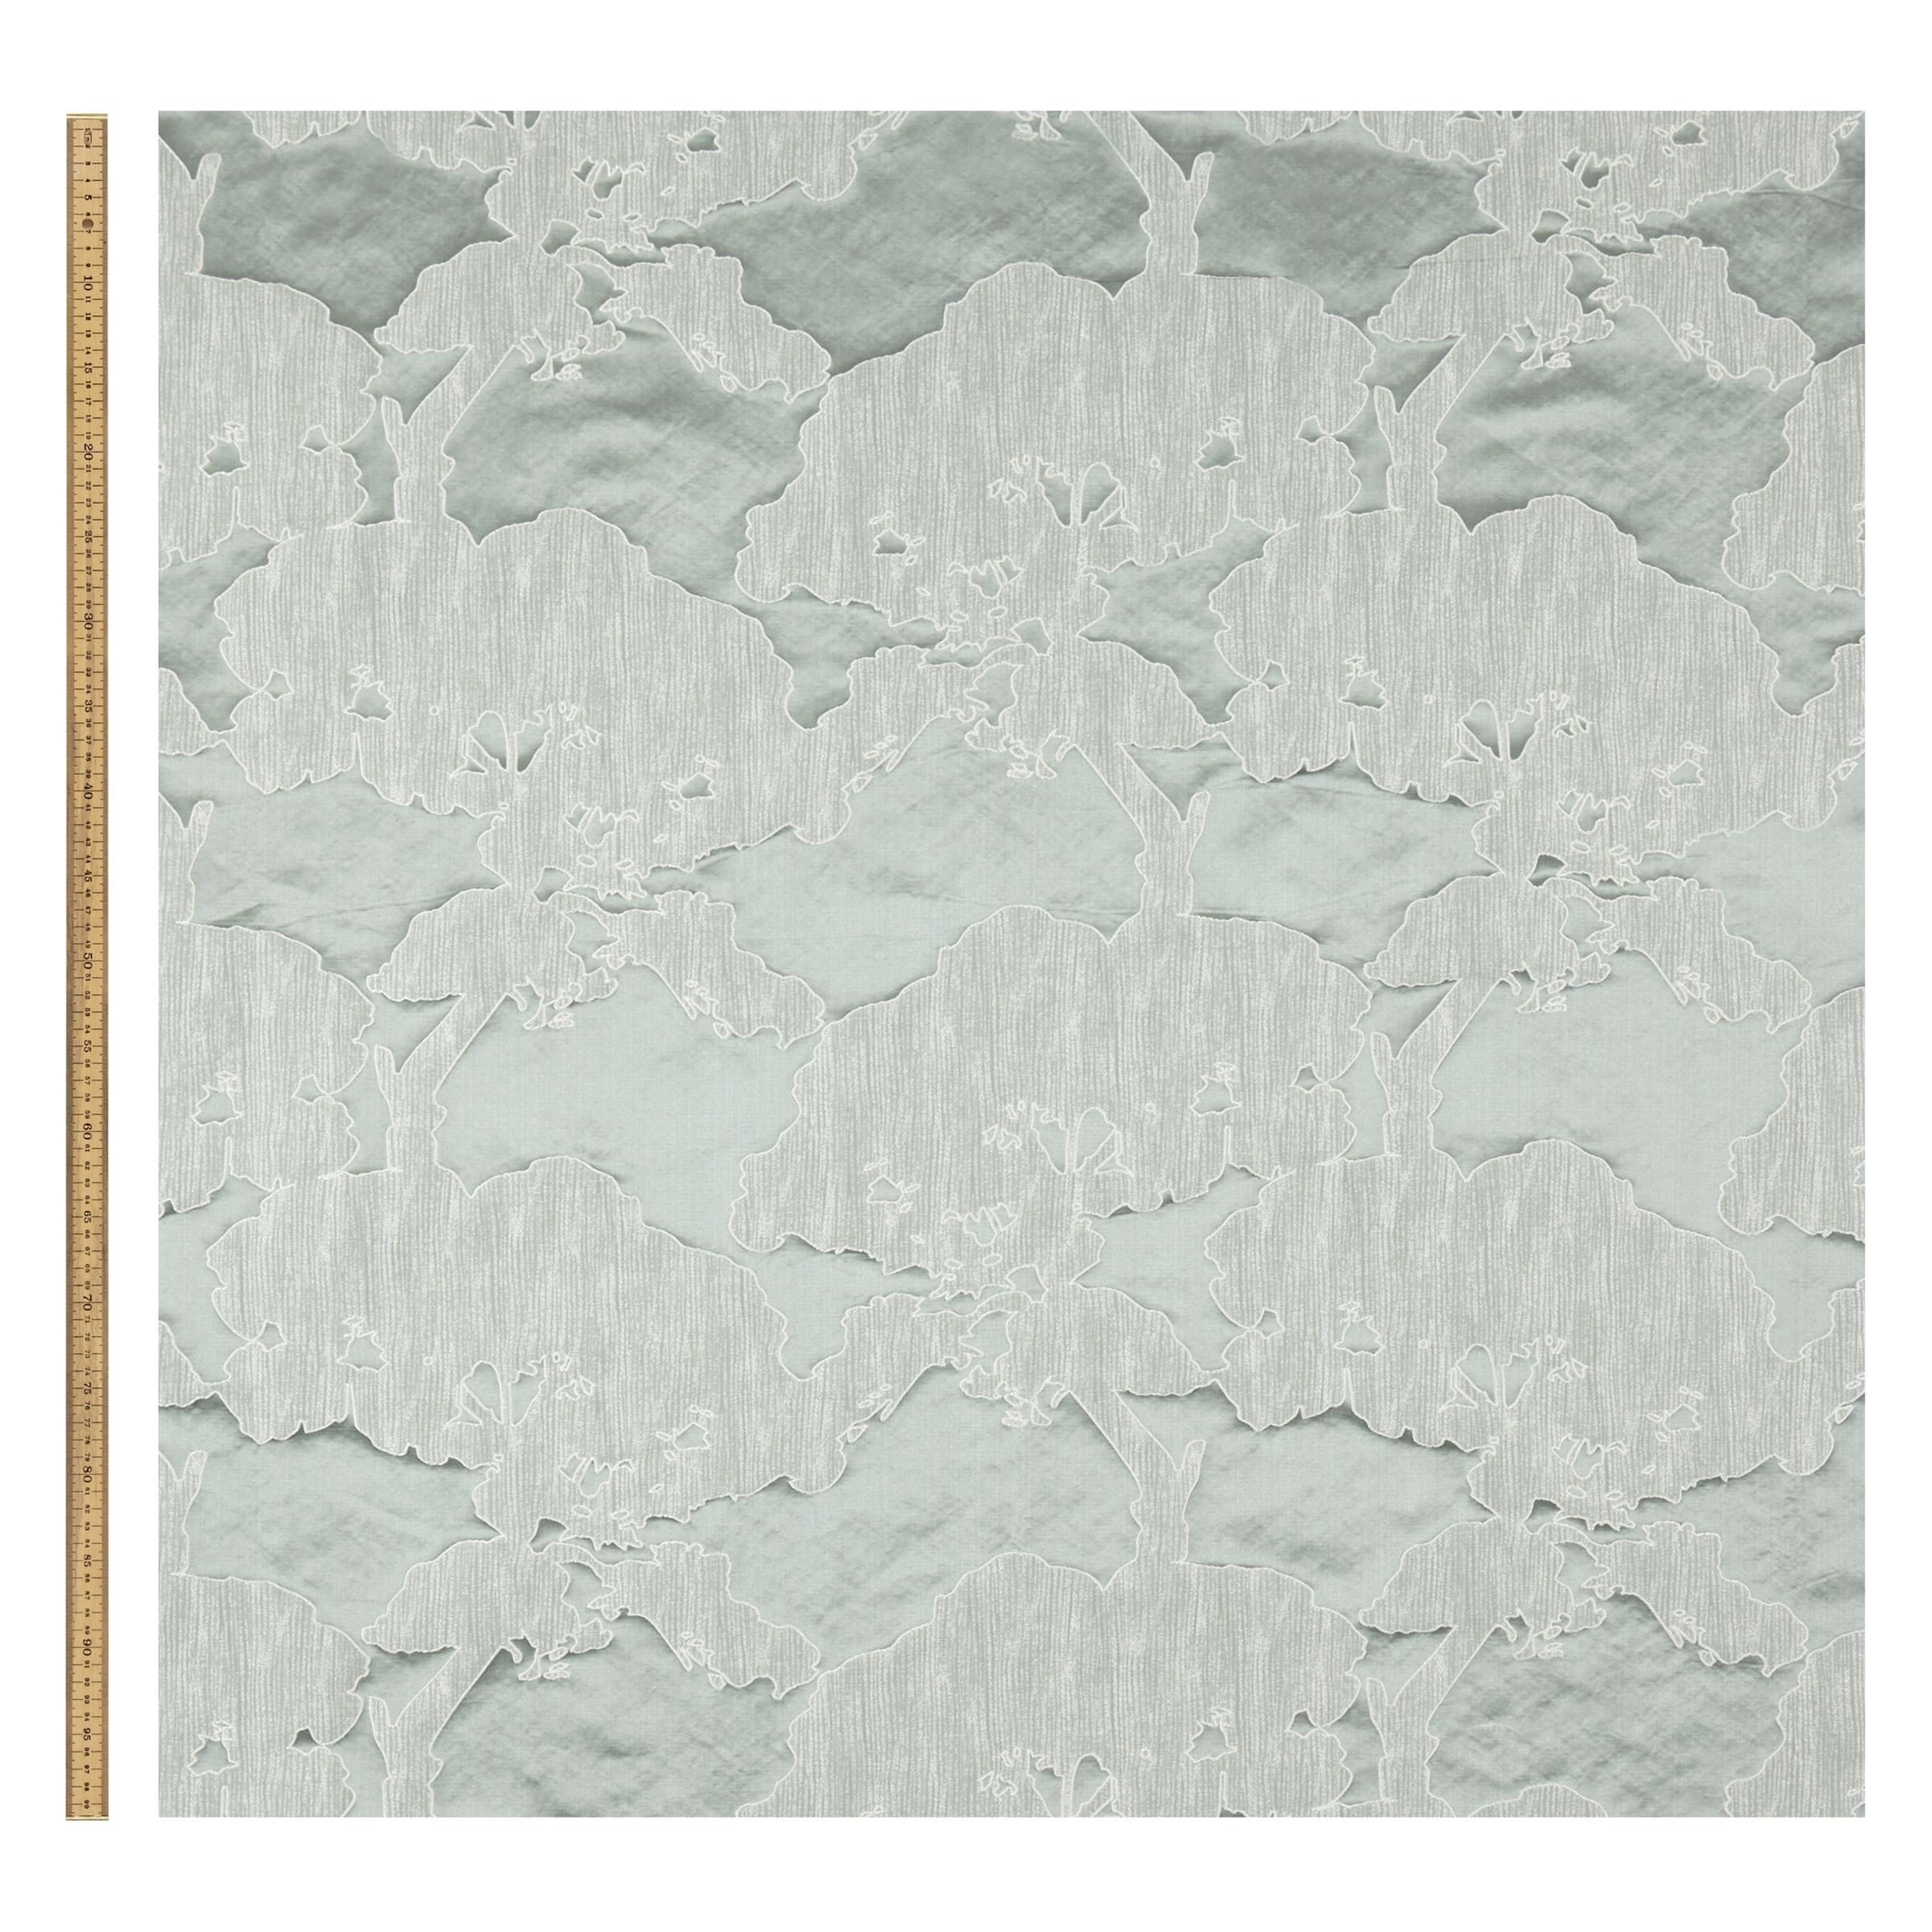 John Lewis & Partners Komako Furnishing Fabric, Mint